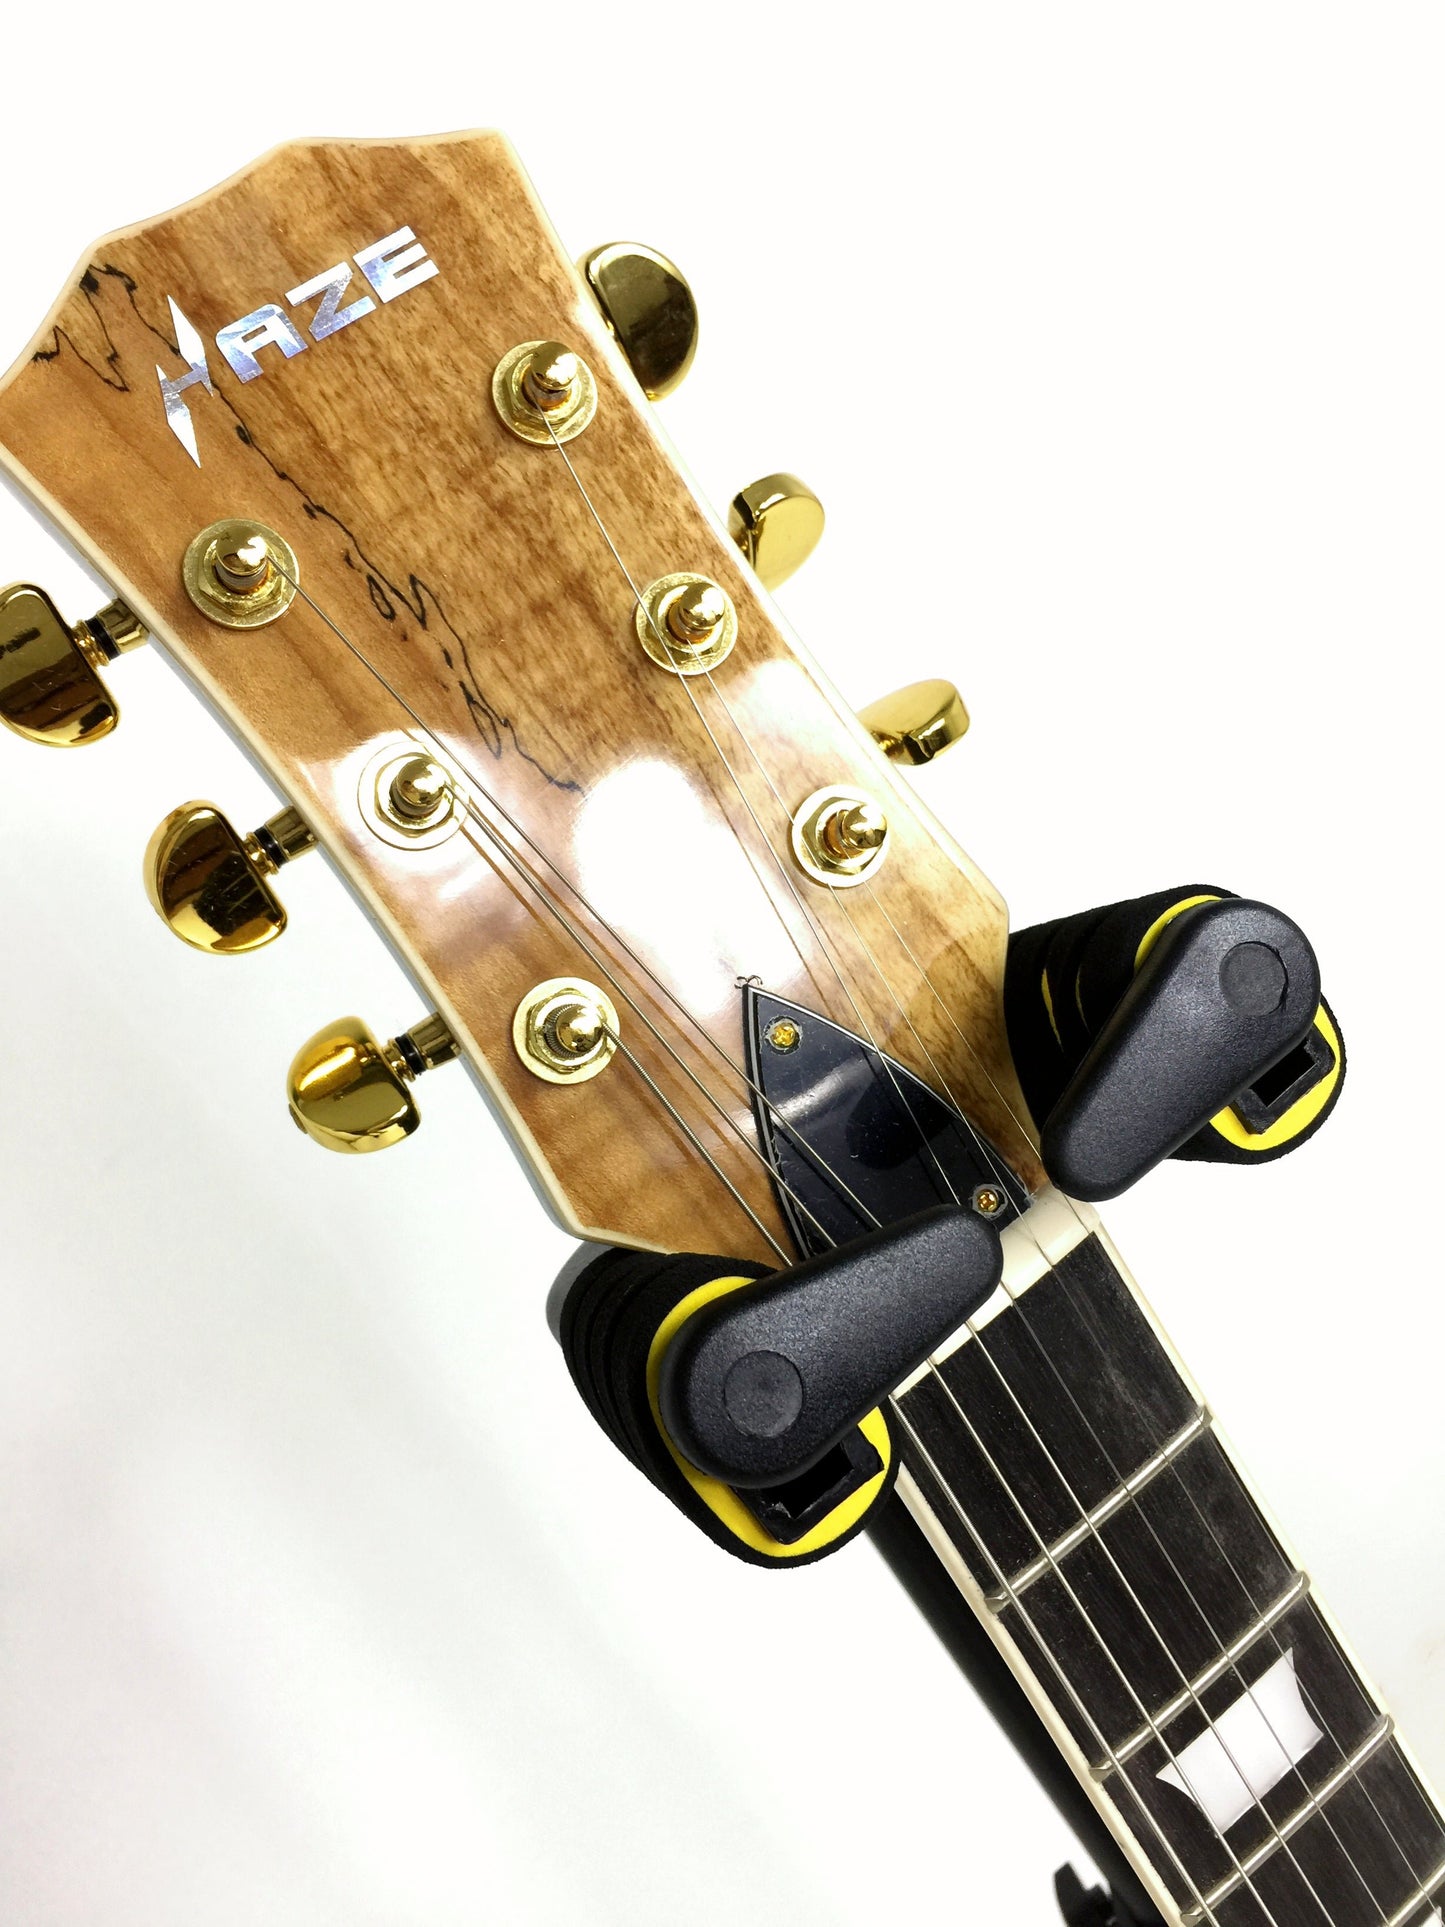 Haze HJGSL1B Guitar Stand, Height-Adjustable, Gravity Locking Design